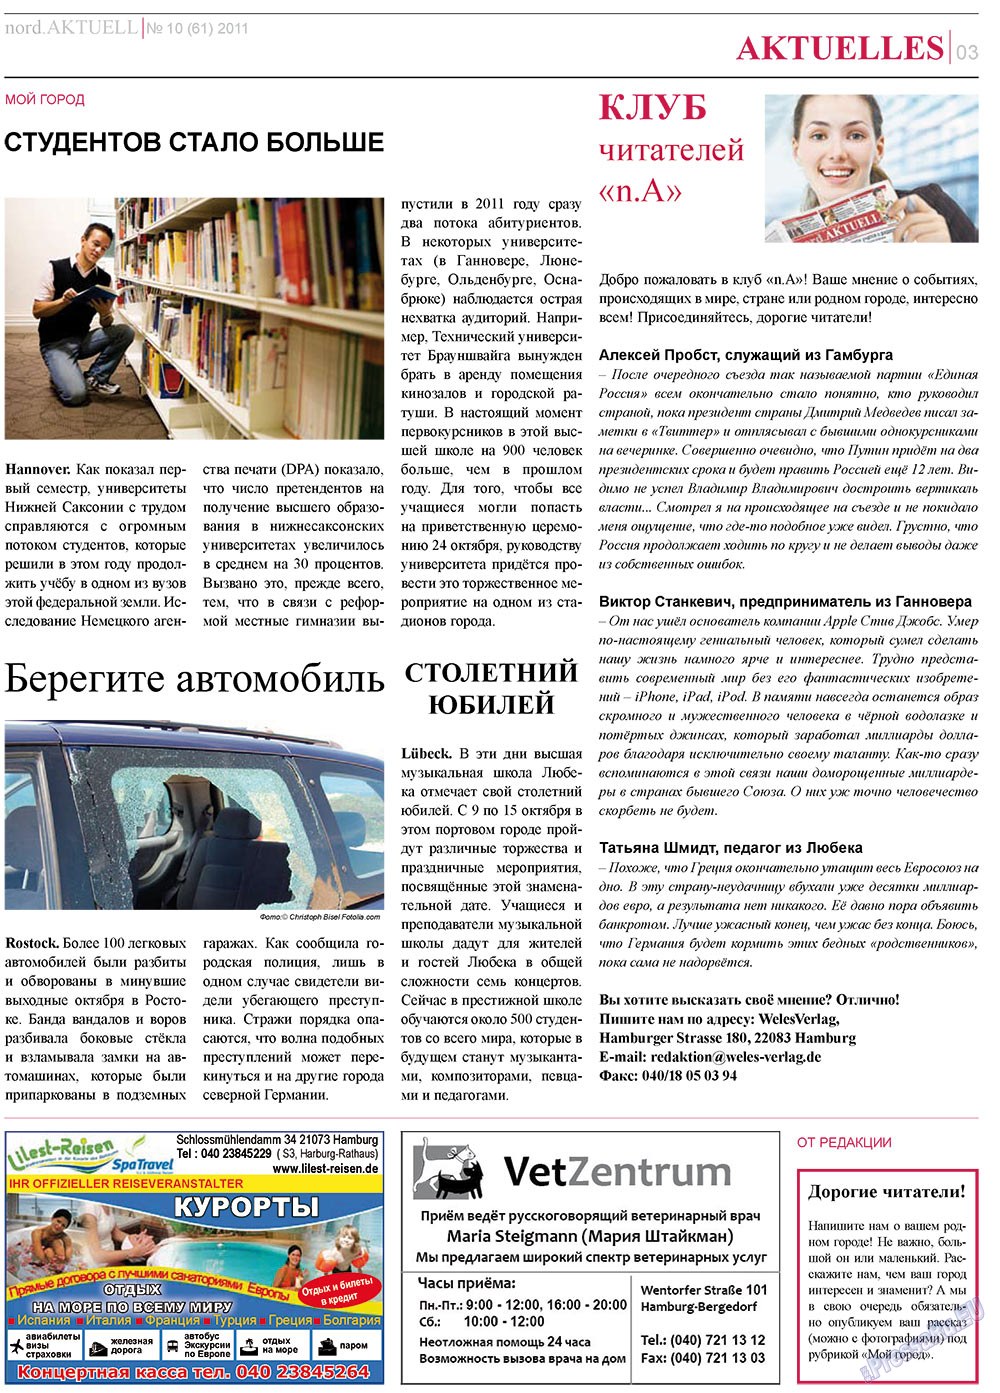 nord.Aktuell, газета. 2011 №10 стр.3